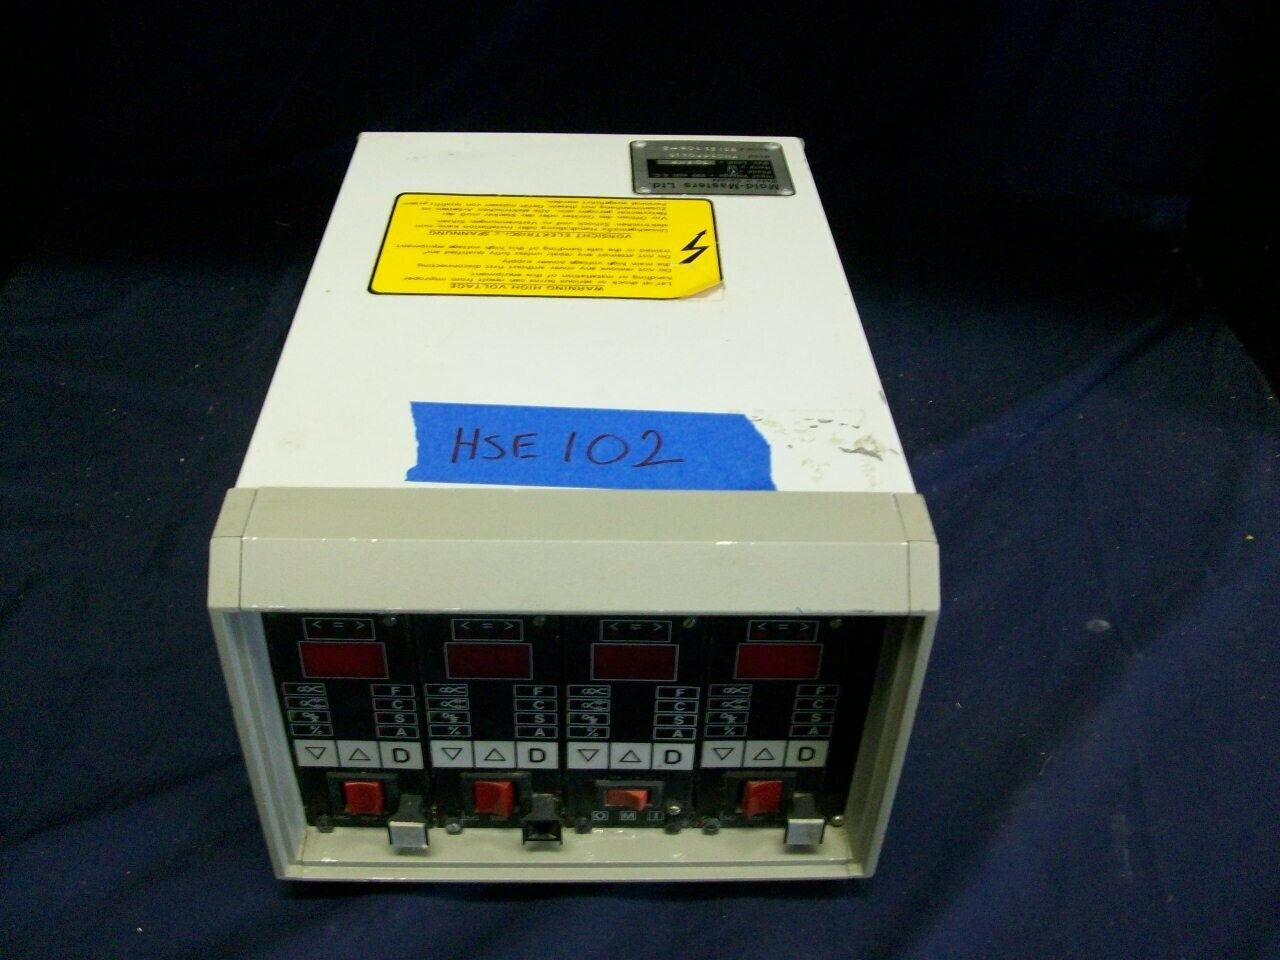 Mold-masters Tmo3320a15 4 Zone Hot Runner Temperature Controller